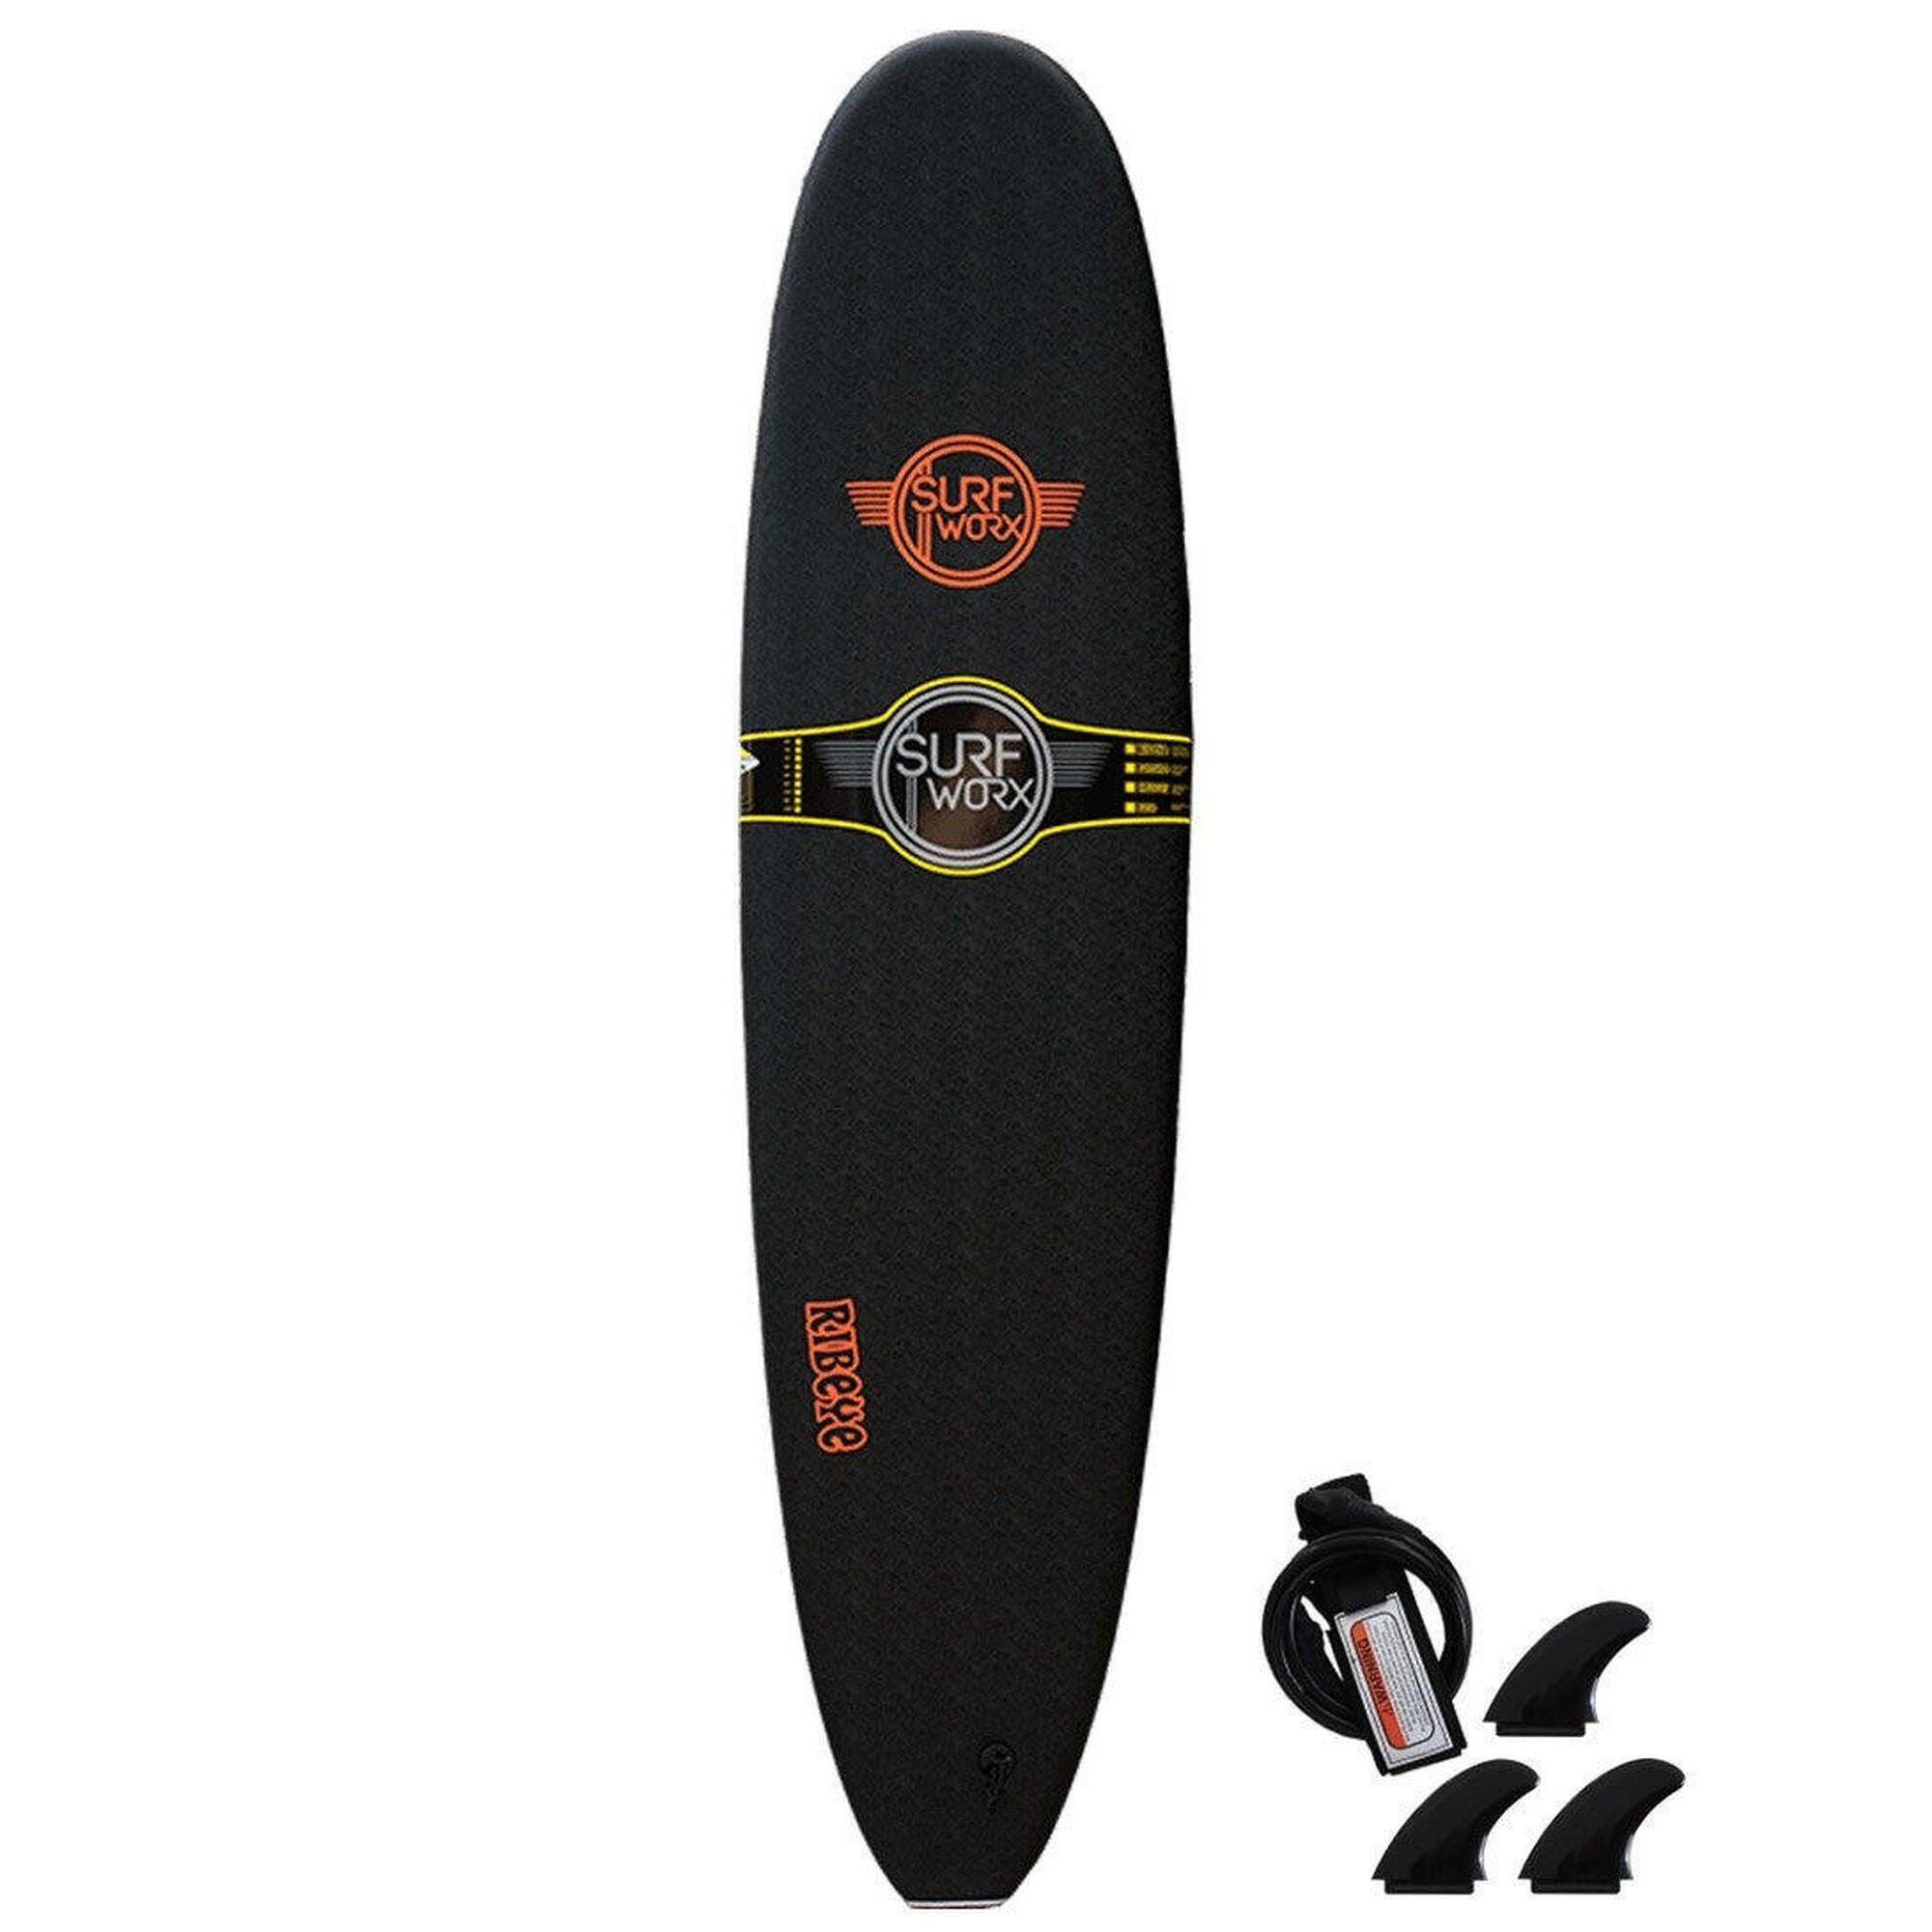 SURFWORX Surfworx Ribeye Mini Mal soft surfboard 8ft 0 Black